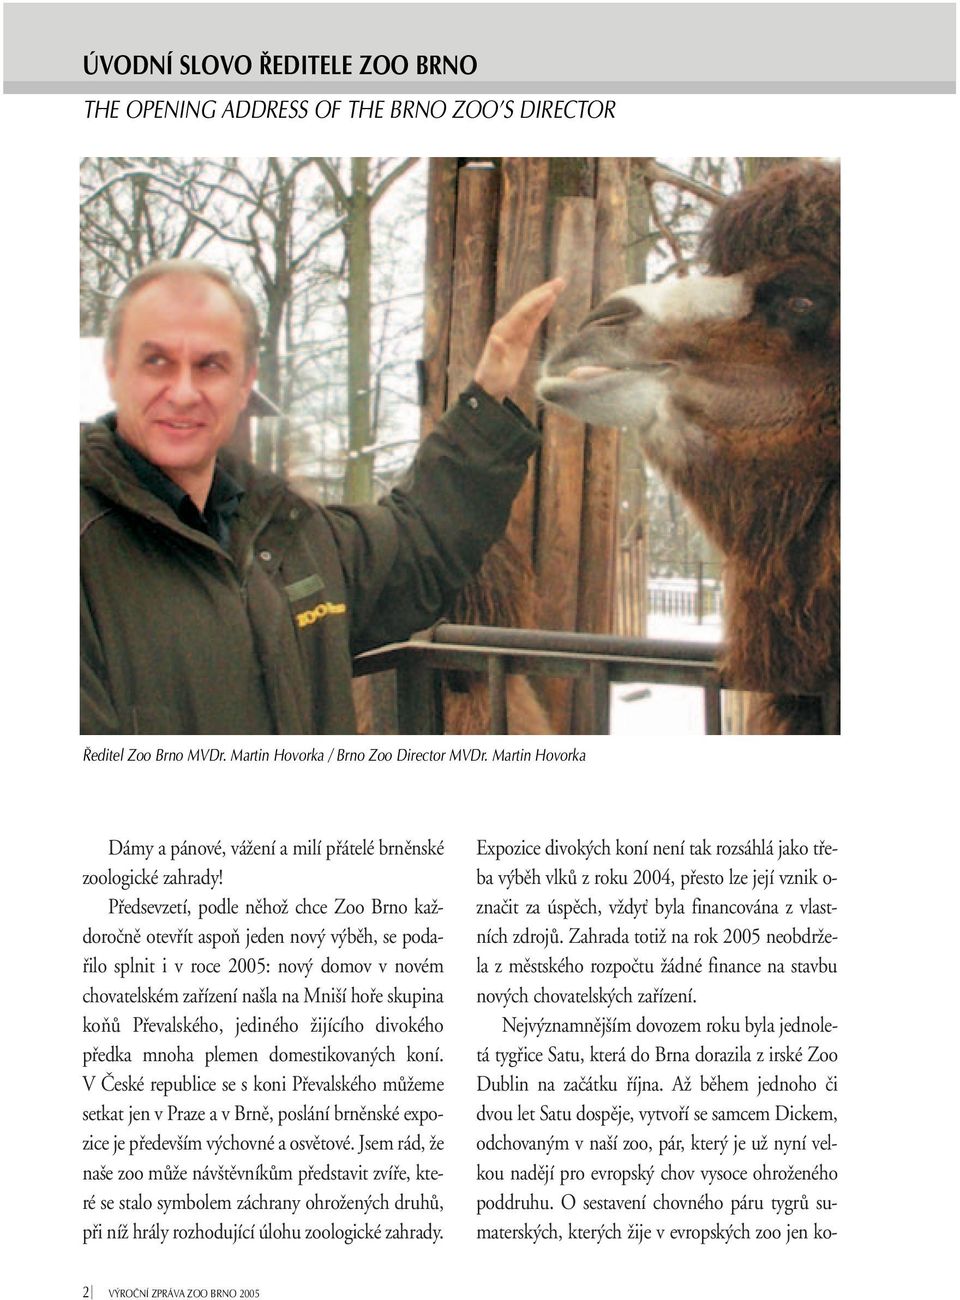 Pfiedsevzetí, podle nûhoï chce Zoo Brno kaïdoroãnû otevfiít aspoà jeden nov v bûh, se podafiilo splnit i v roce 2005: nov domov v novém chovatelském zafiízení na la na Mni í hofie skupina koàû